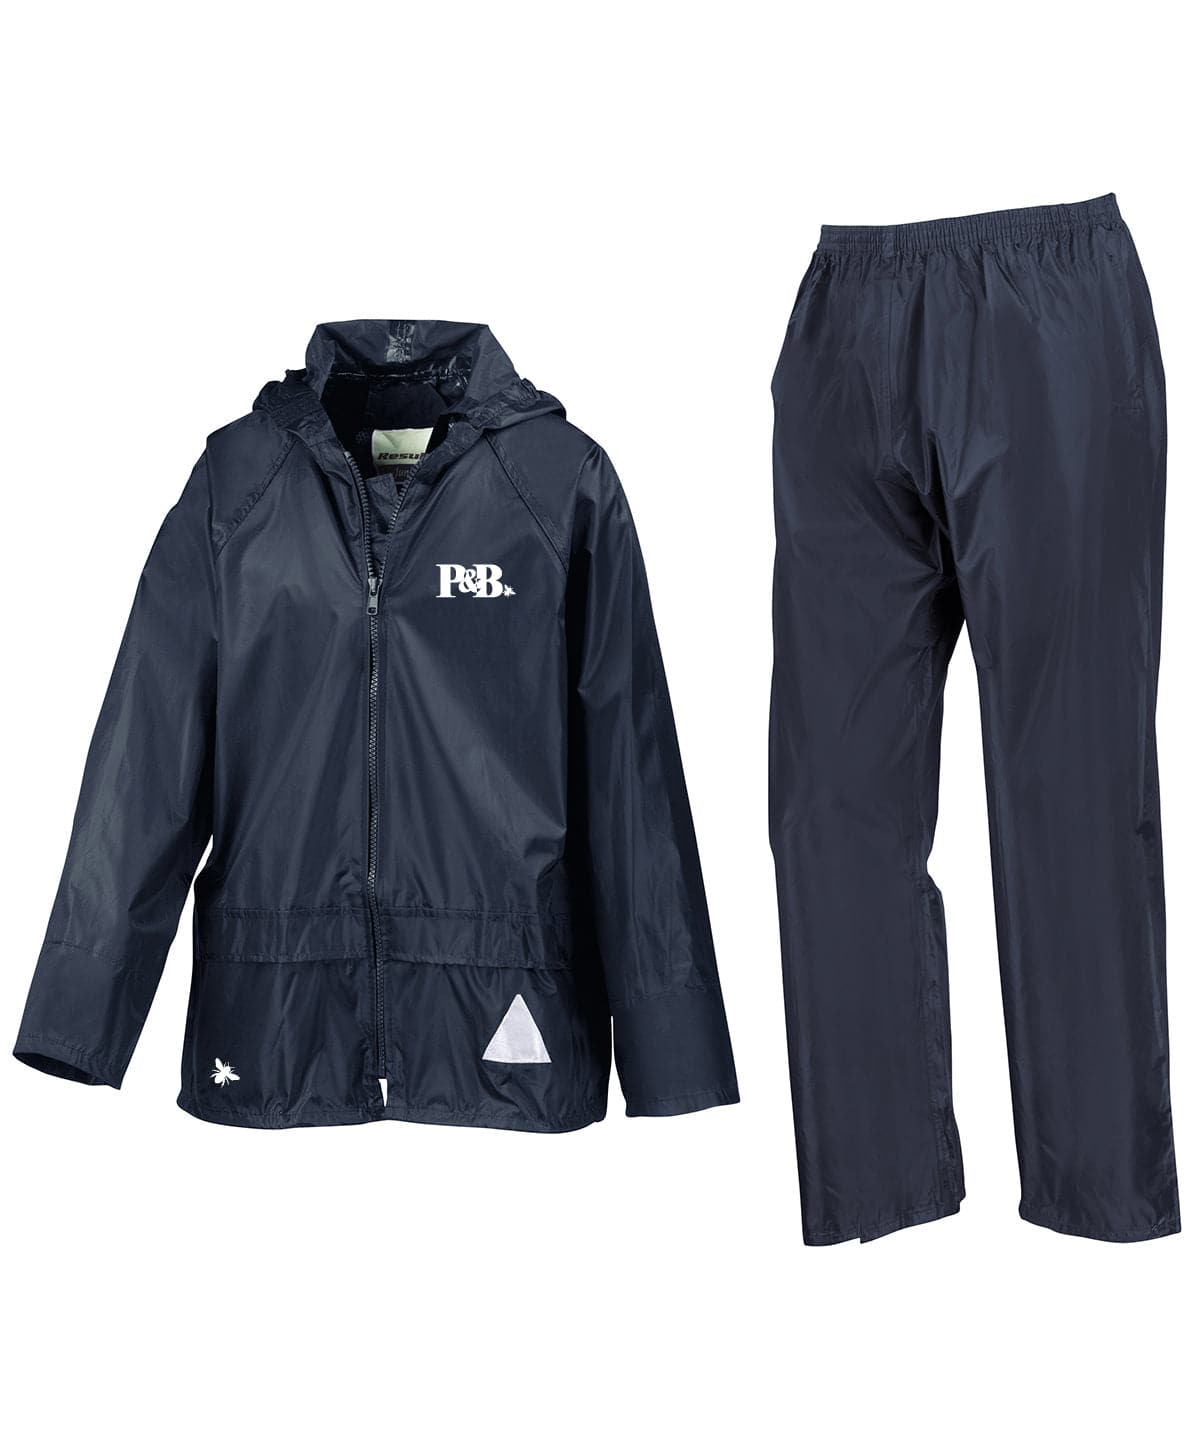 Alex - Junior waterproof jacket and trouser set